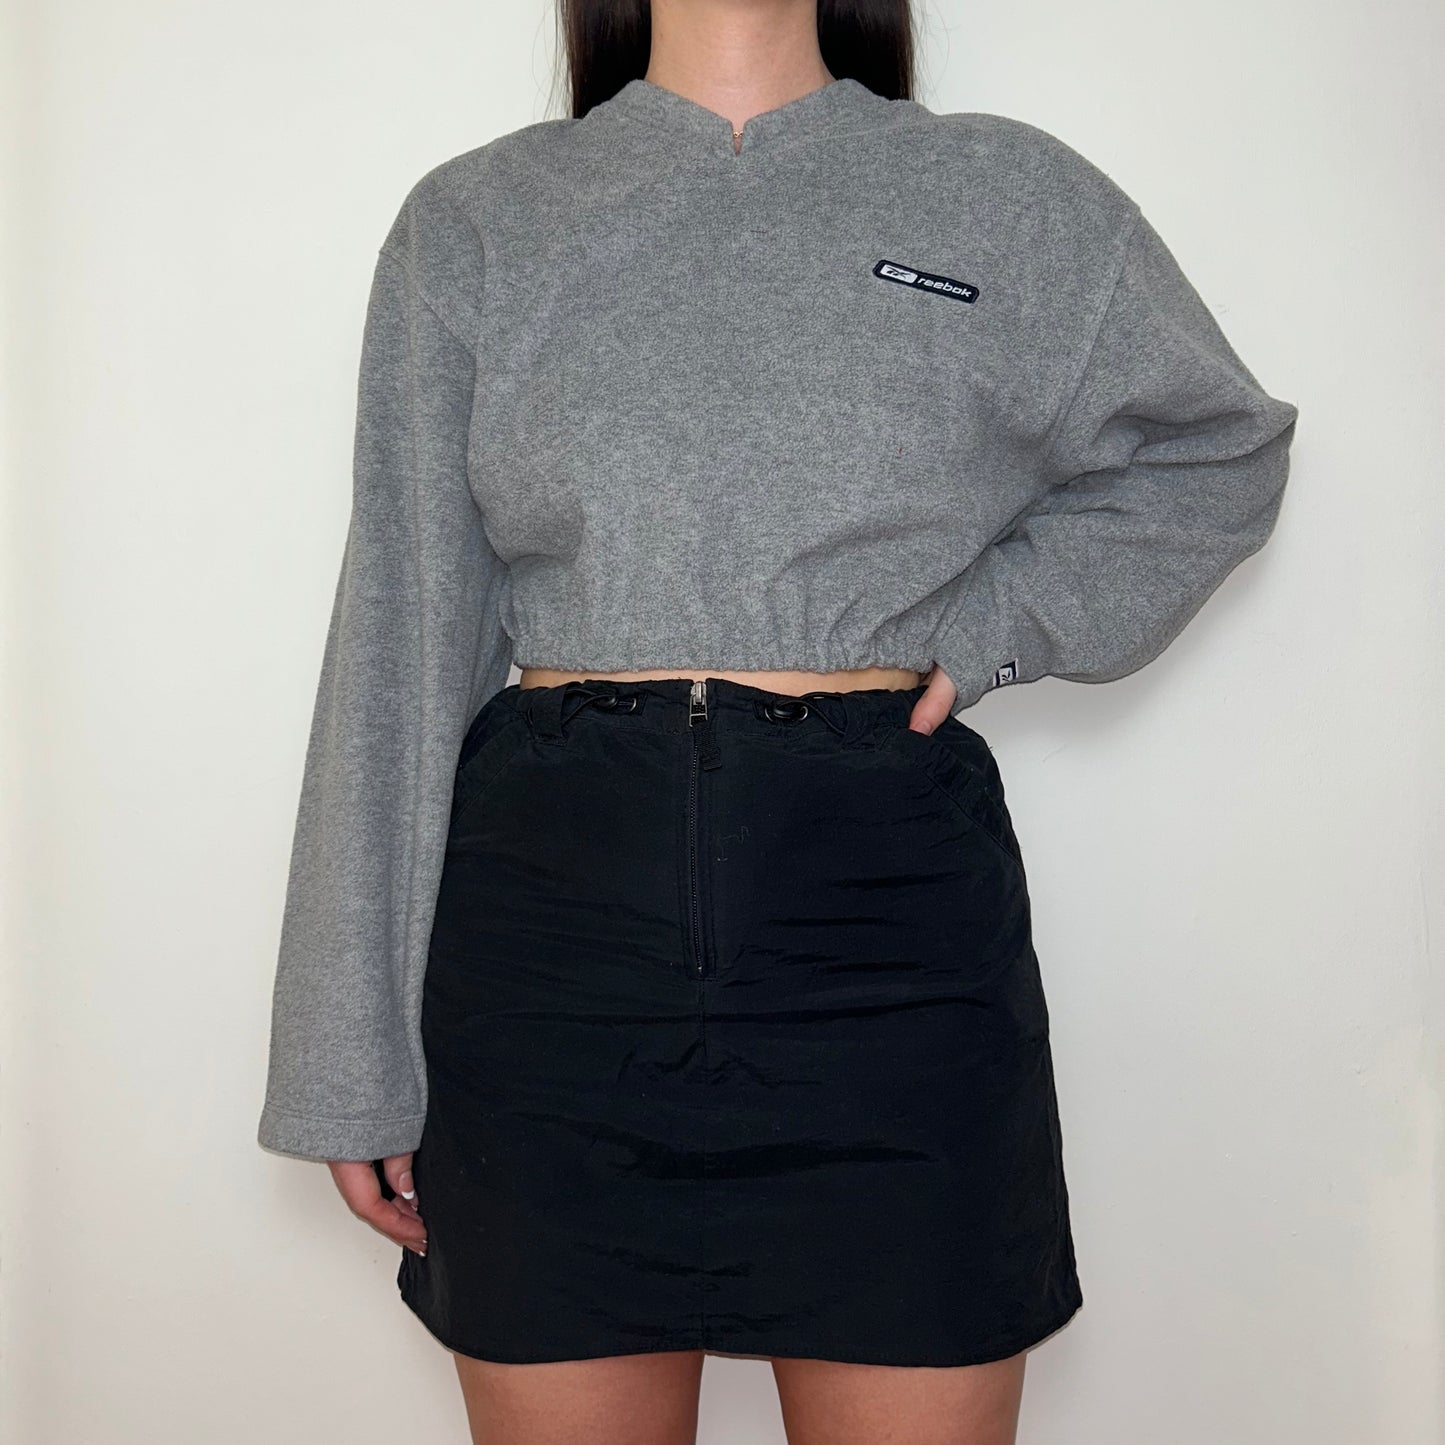 grey cropped sweatshirt with reebok logo shown on a model wearing a black skirt